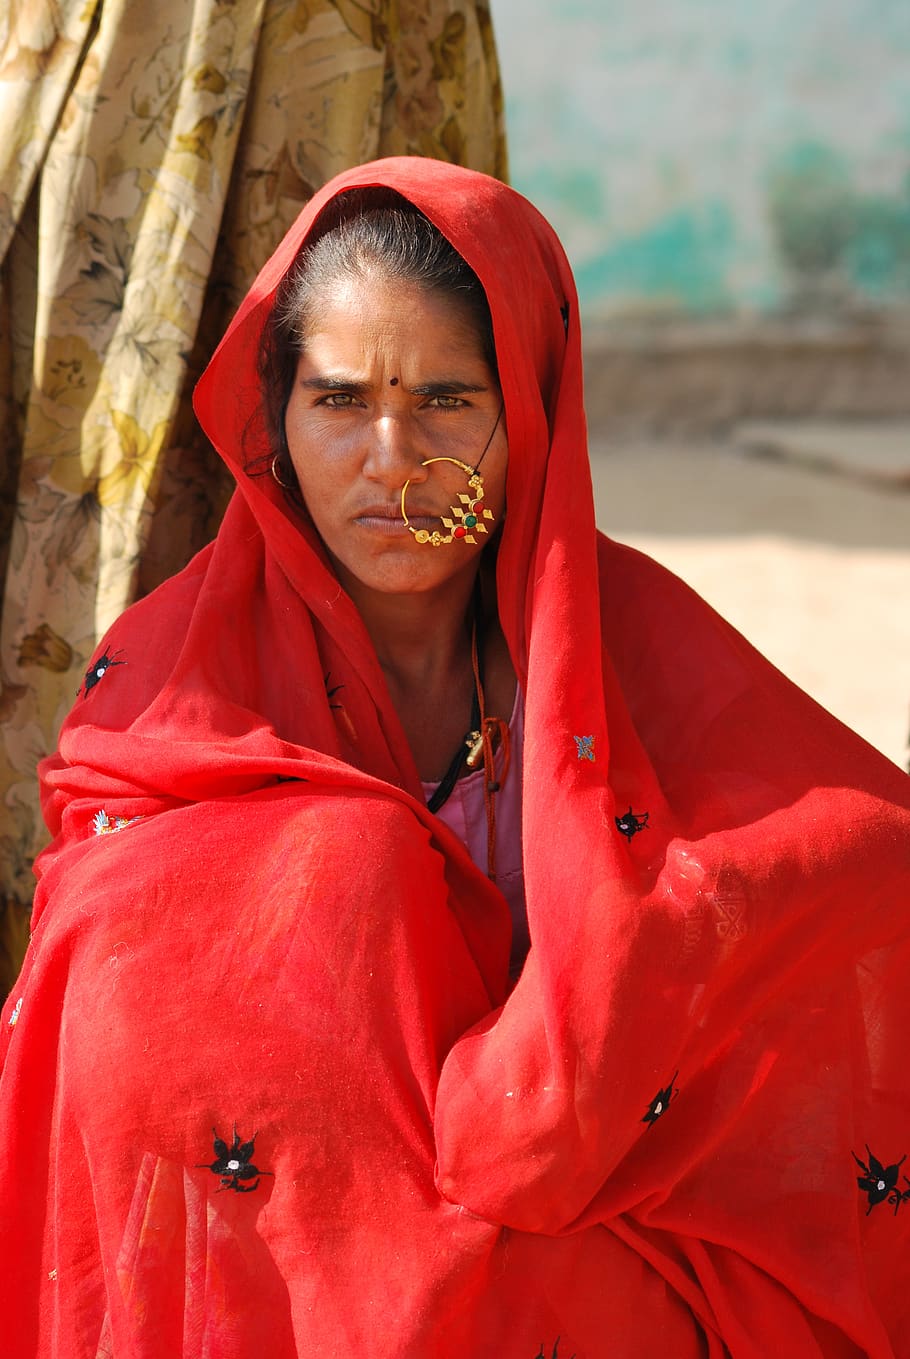 wanita, desa, pakaian merah, budaya, pedesaan, india, termenung, perhiasan, satu orang, orang sungguhan